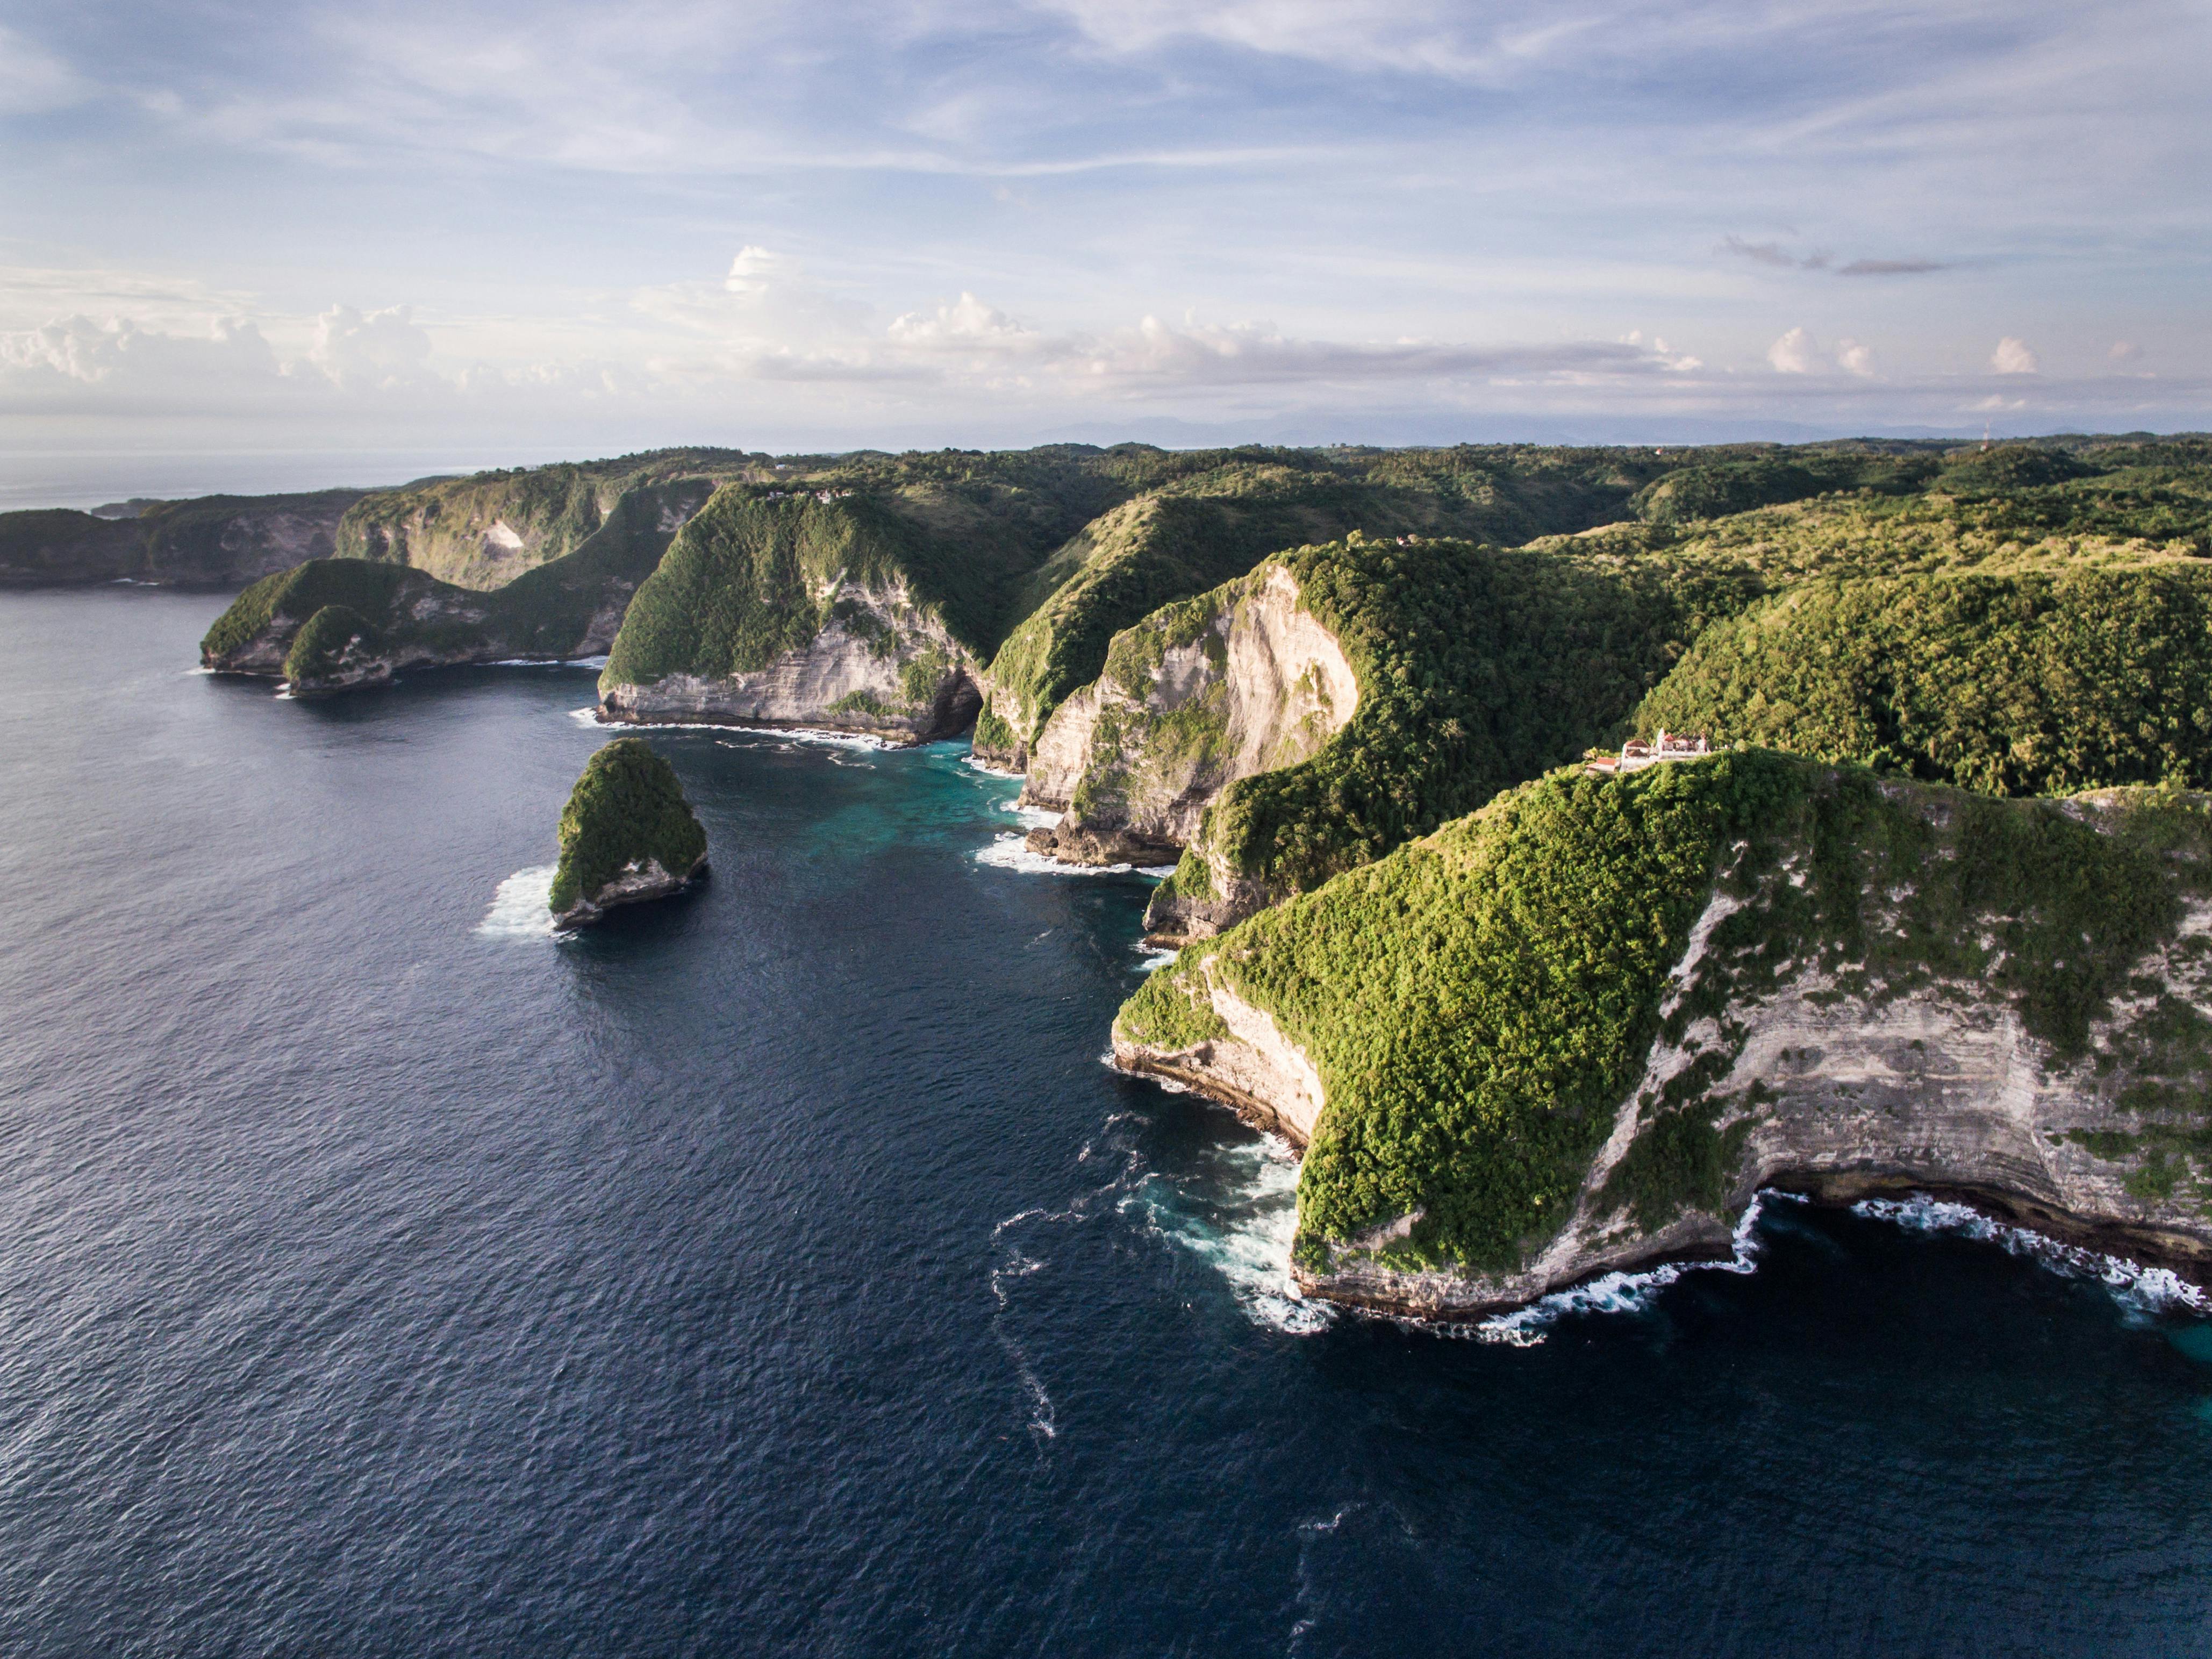 cliffs of the indonesian island of penida